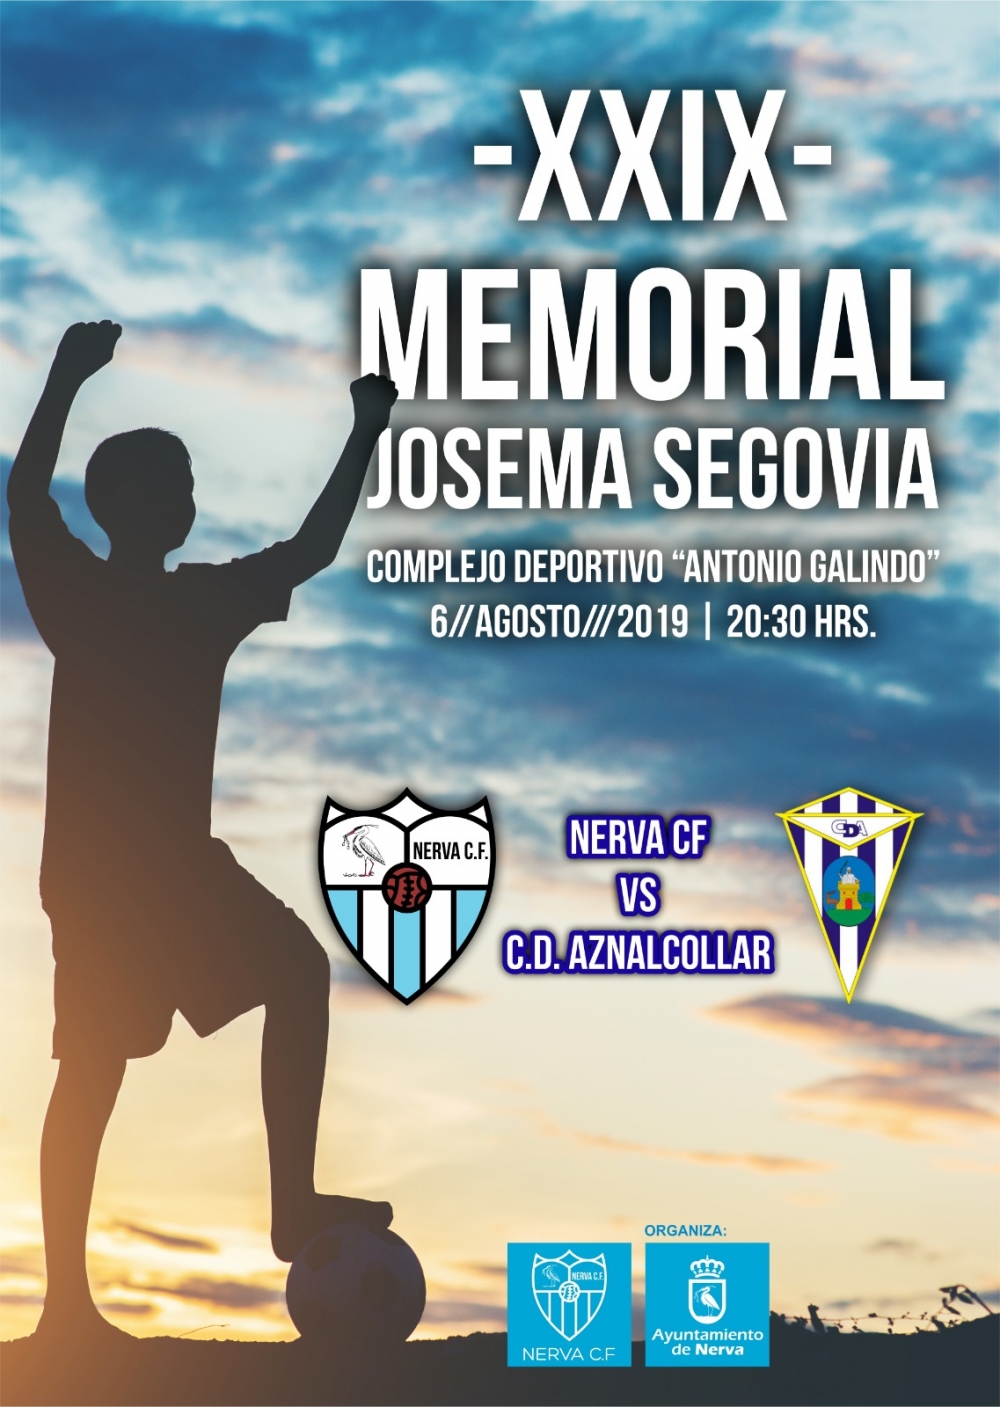 XXIX Memorial Josema Segovia